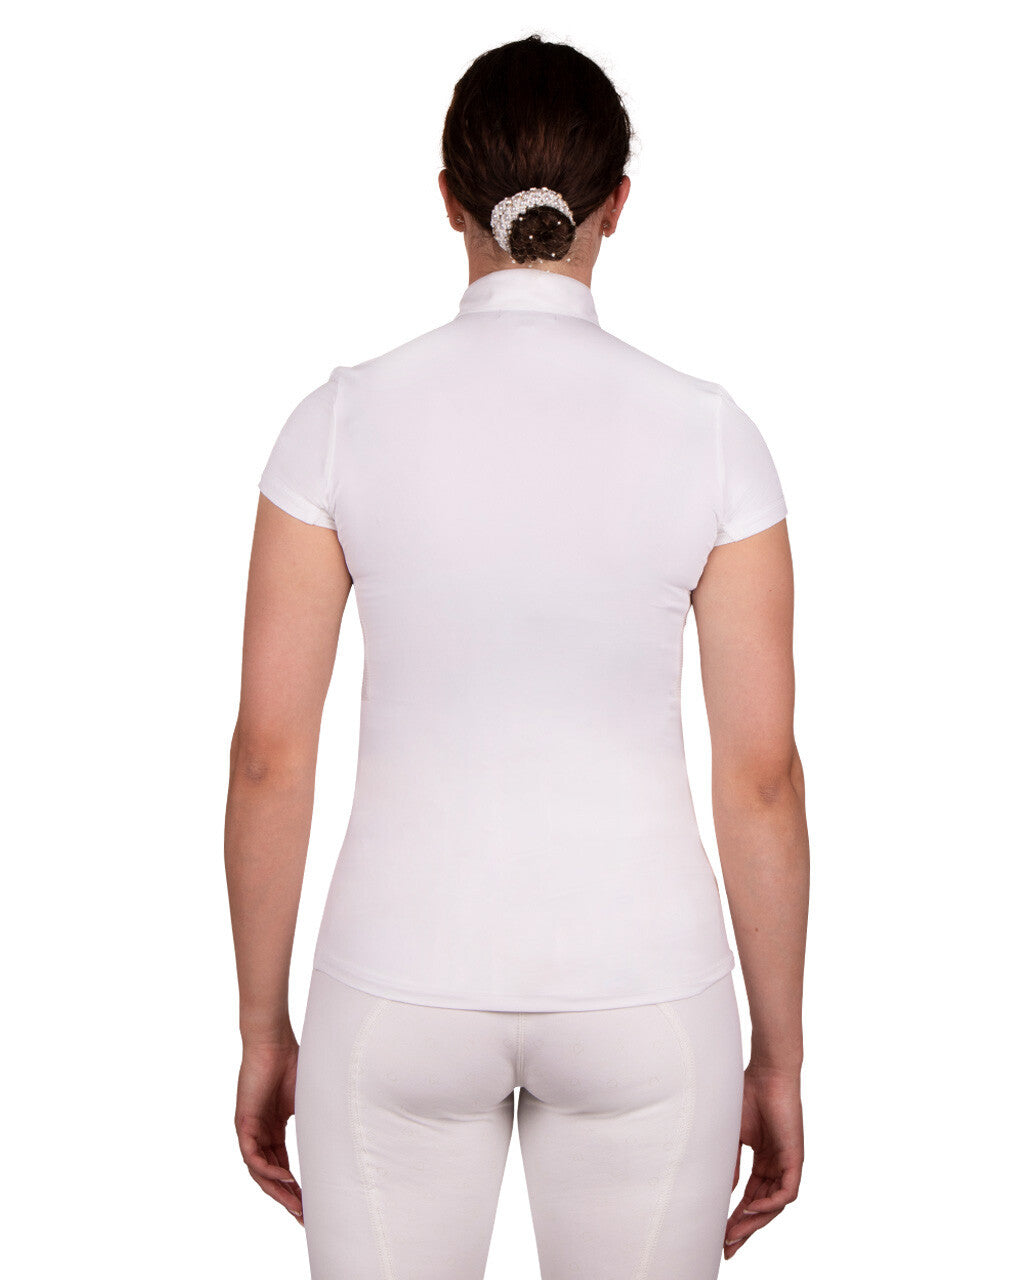 QHP Celesta Competition Shirt - White